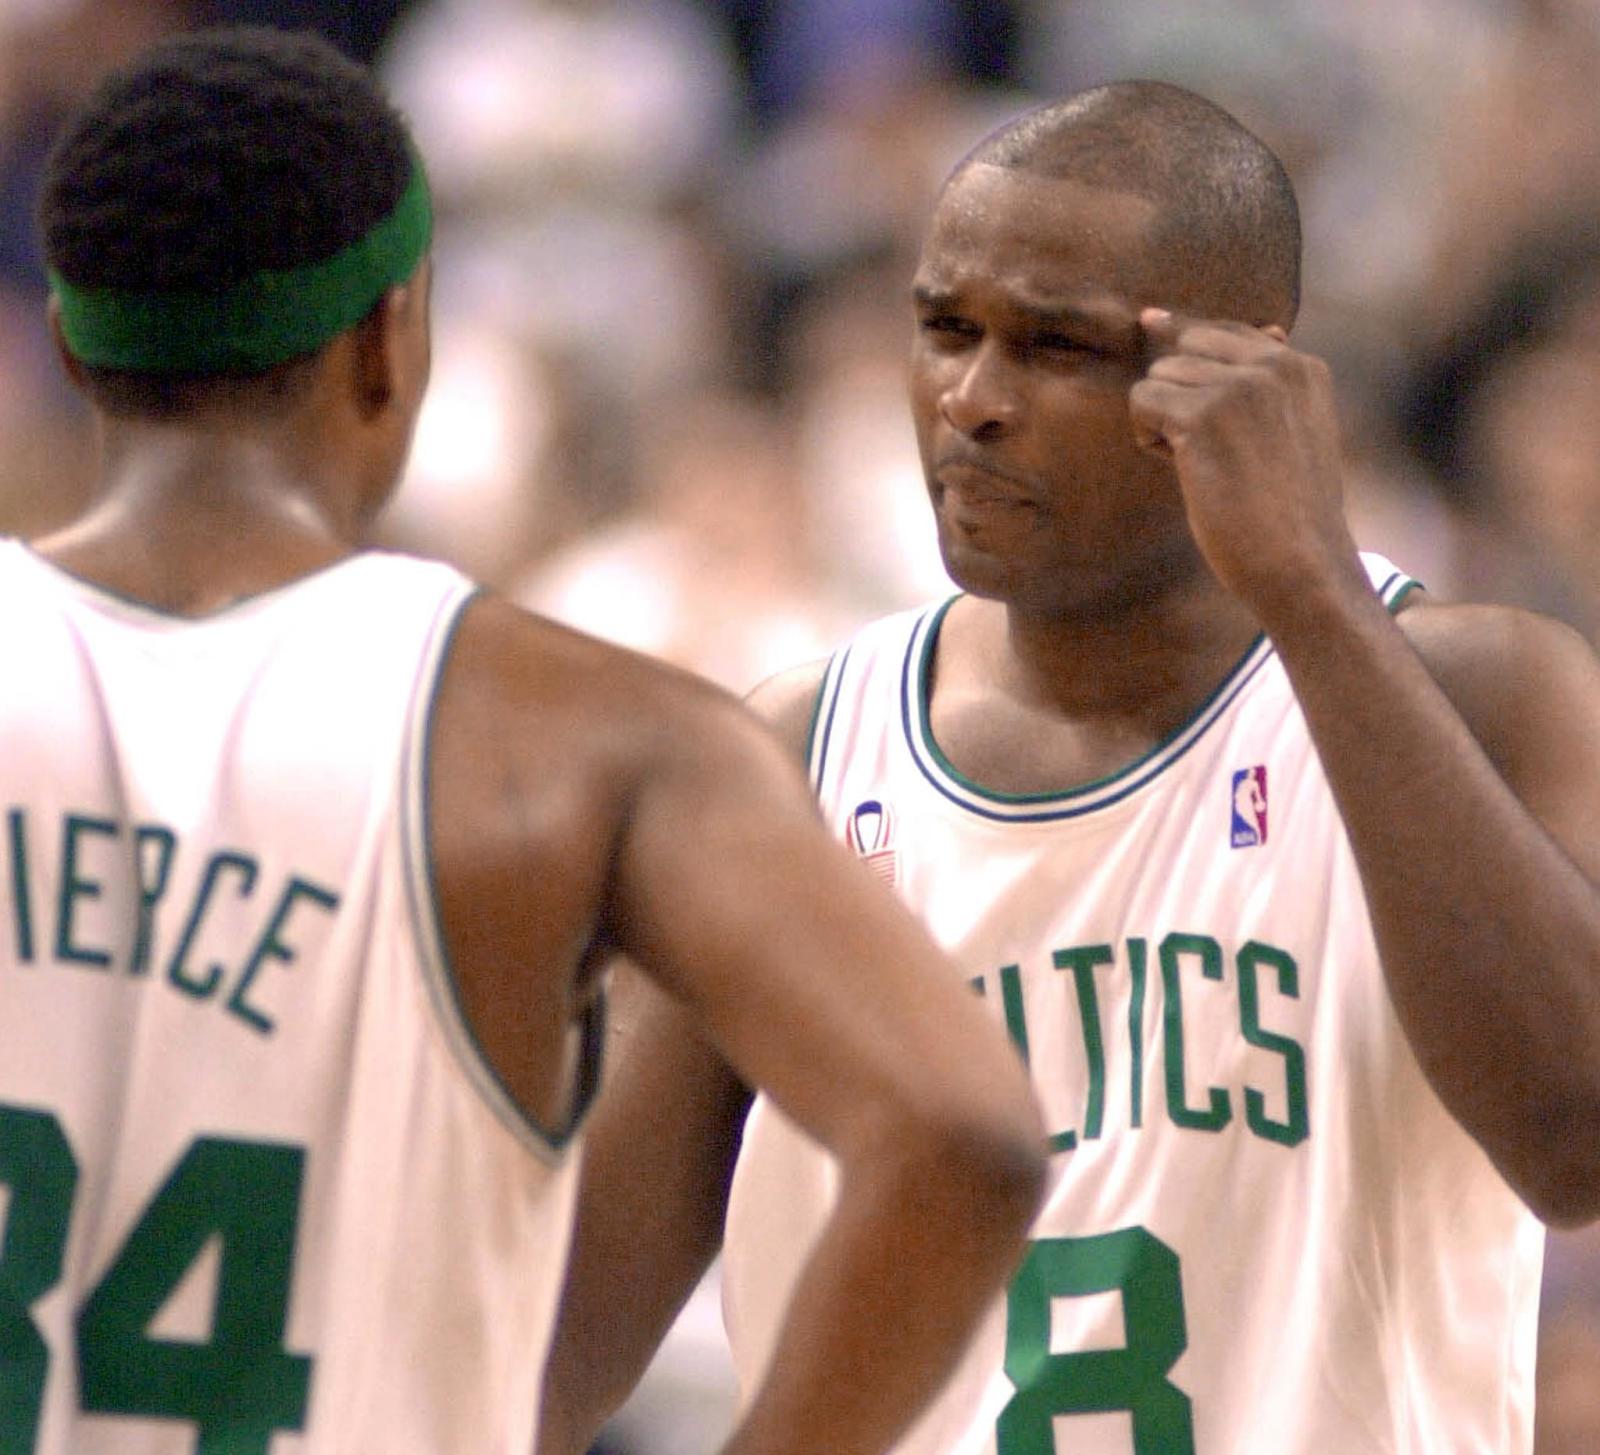 Paul Pierce and Antoine Walker on the Cover - Boston Celtics History